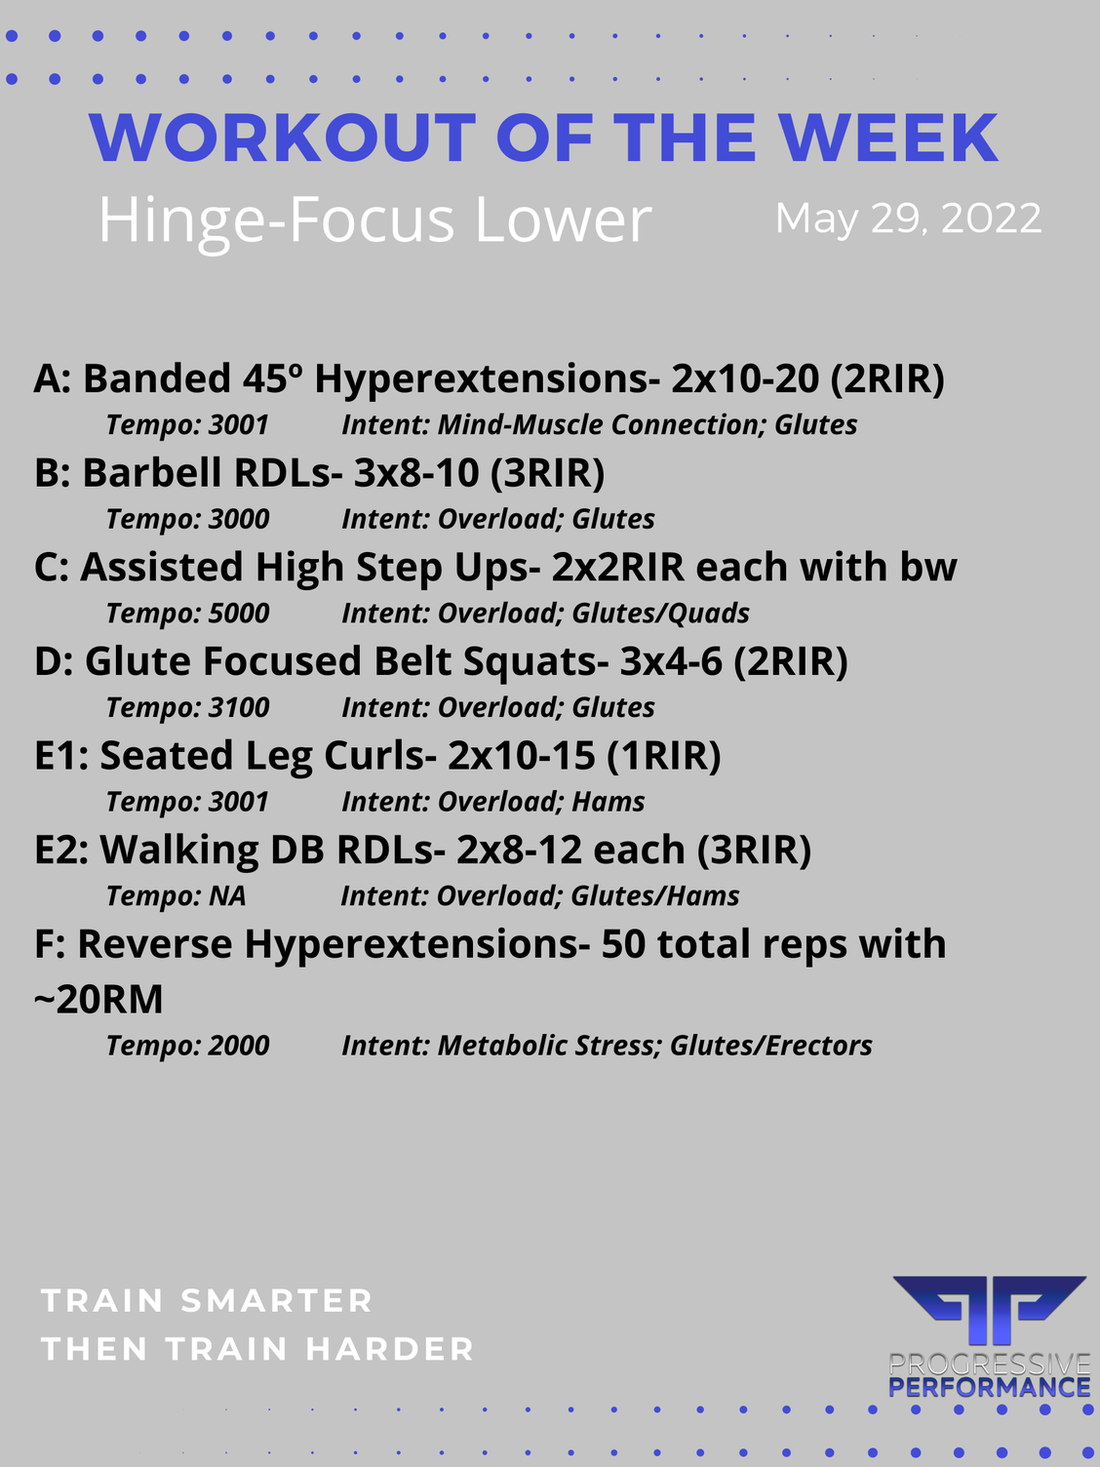 Hinge-Focused Lower